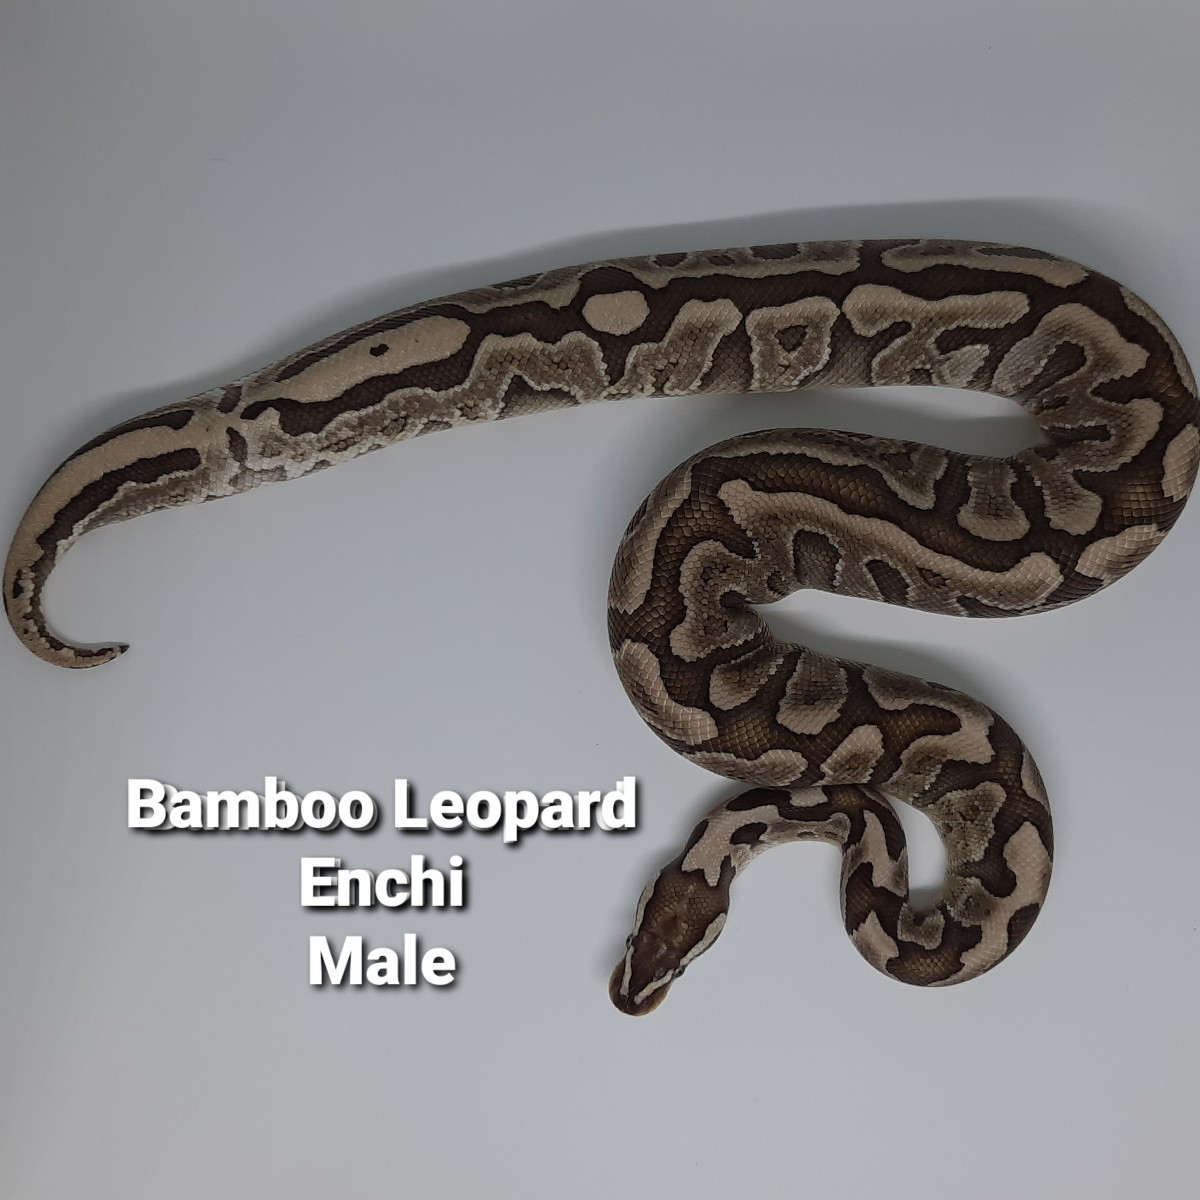 Bamboo Leopard Enchi Male